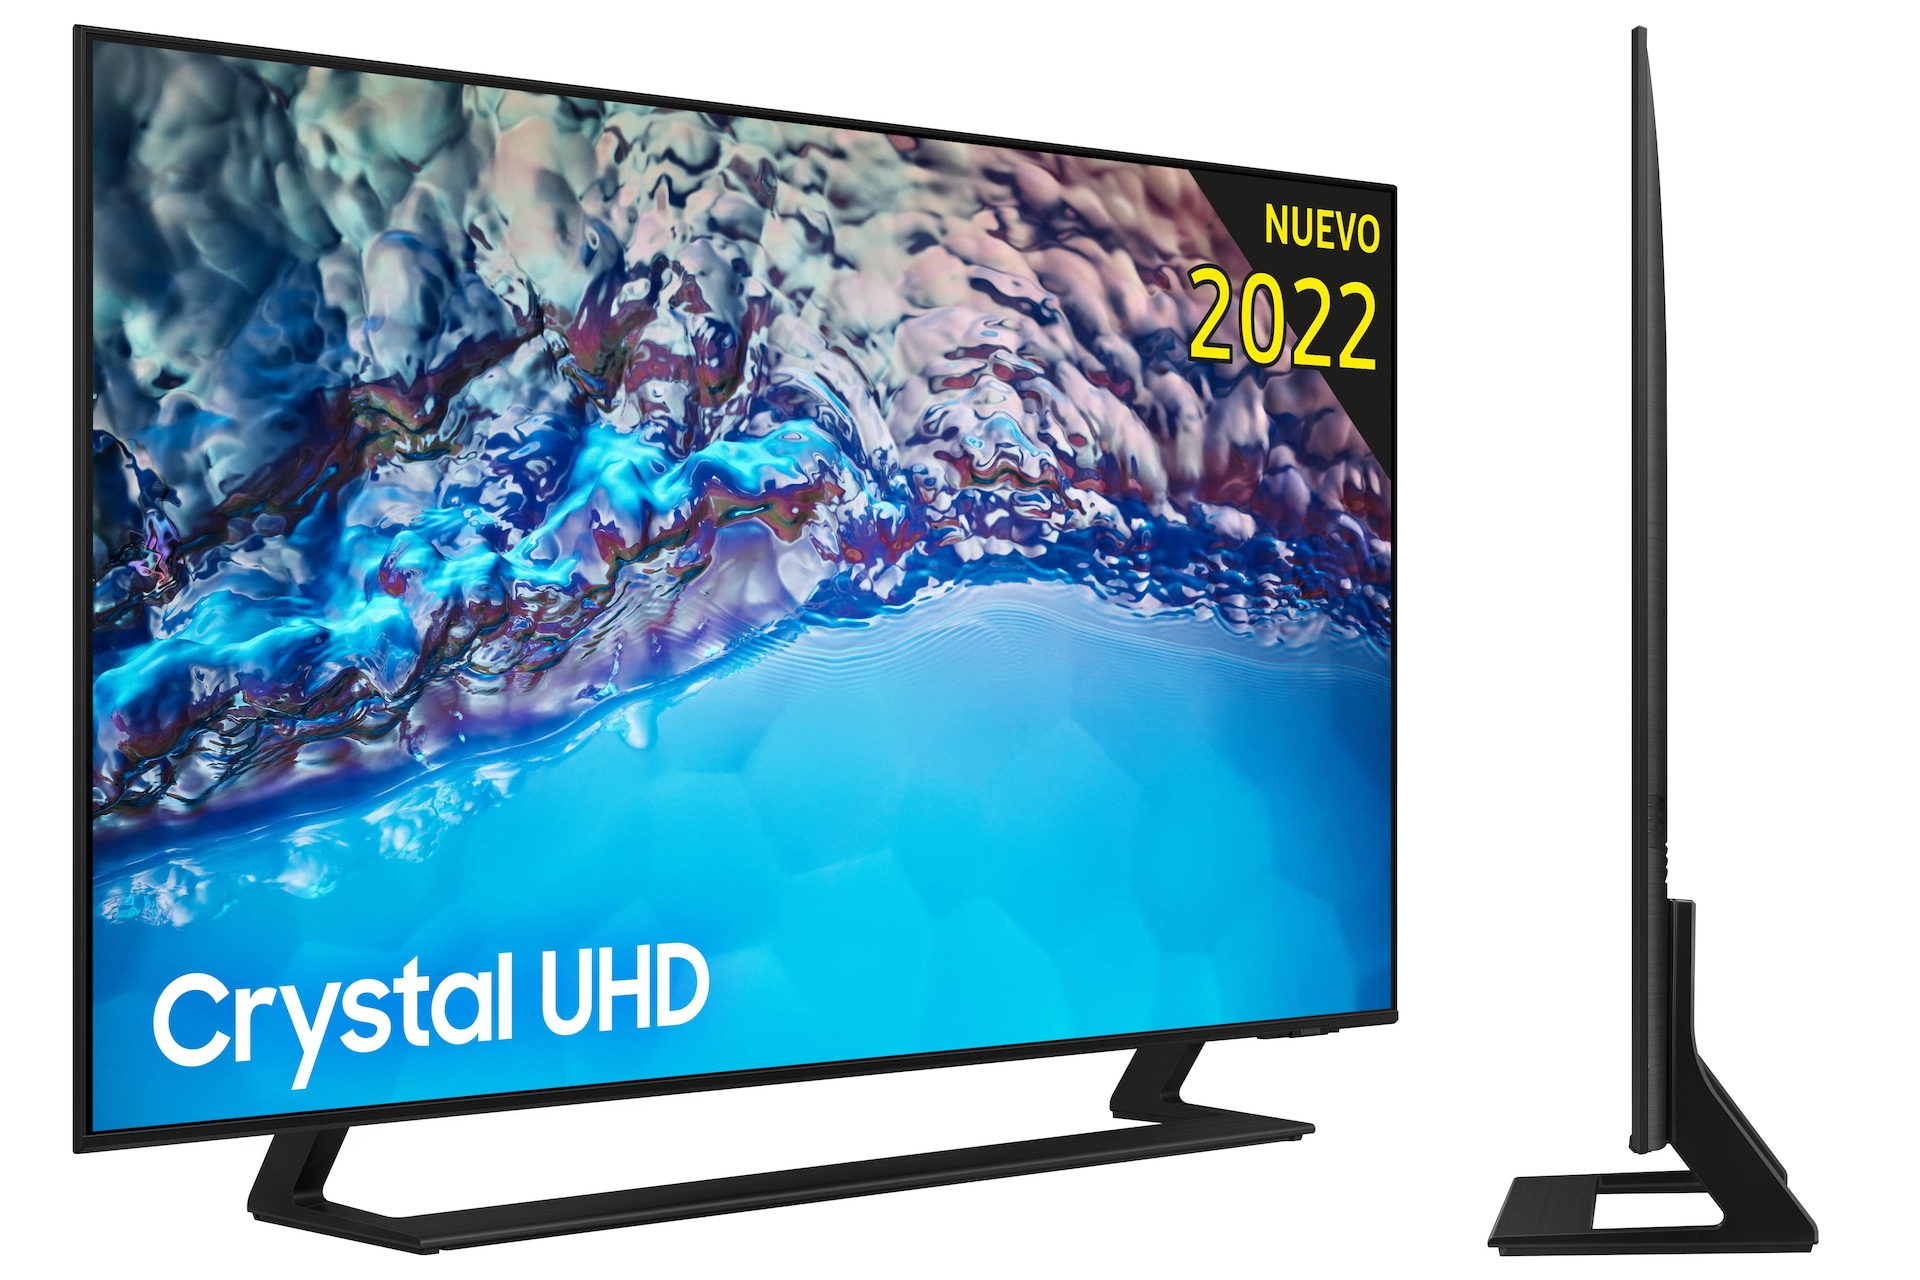 Samsung TV BU8500 Crystal UHD 108cm 43" Smart TV (2022)